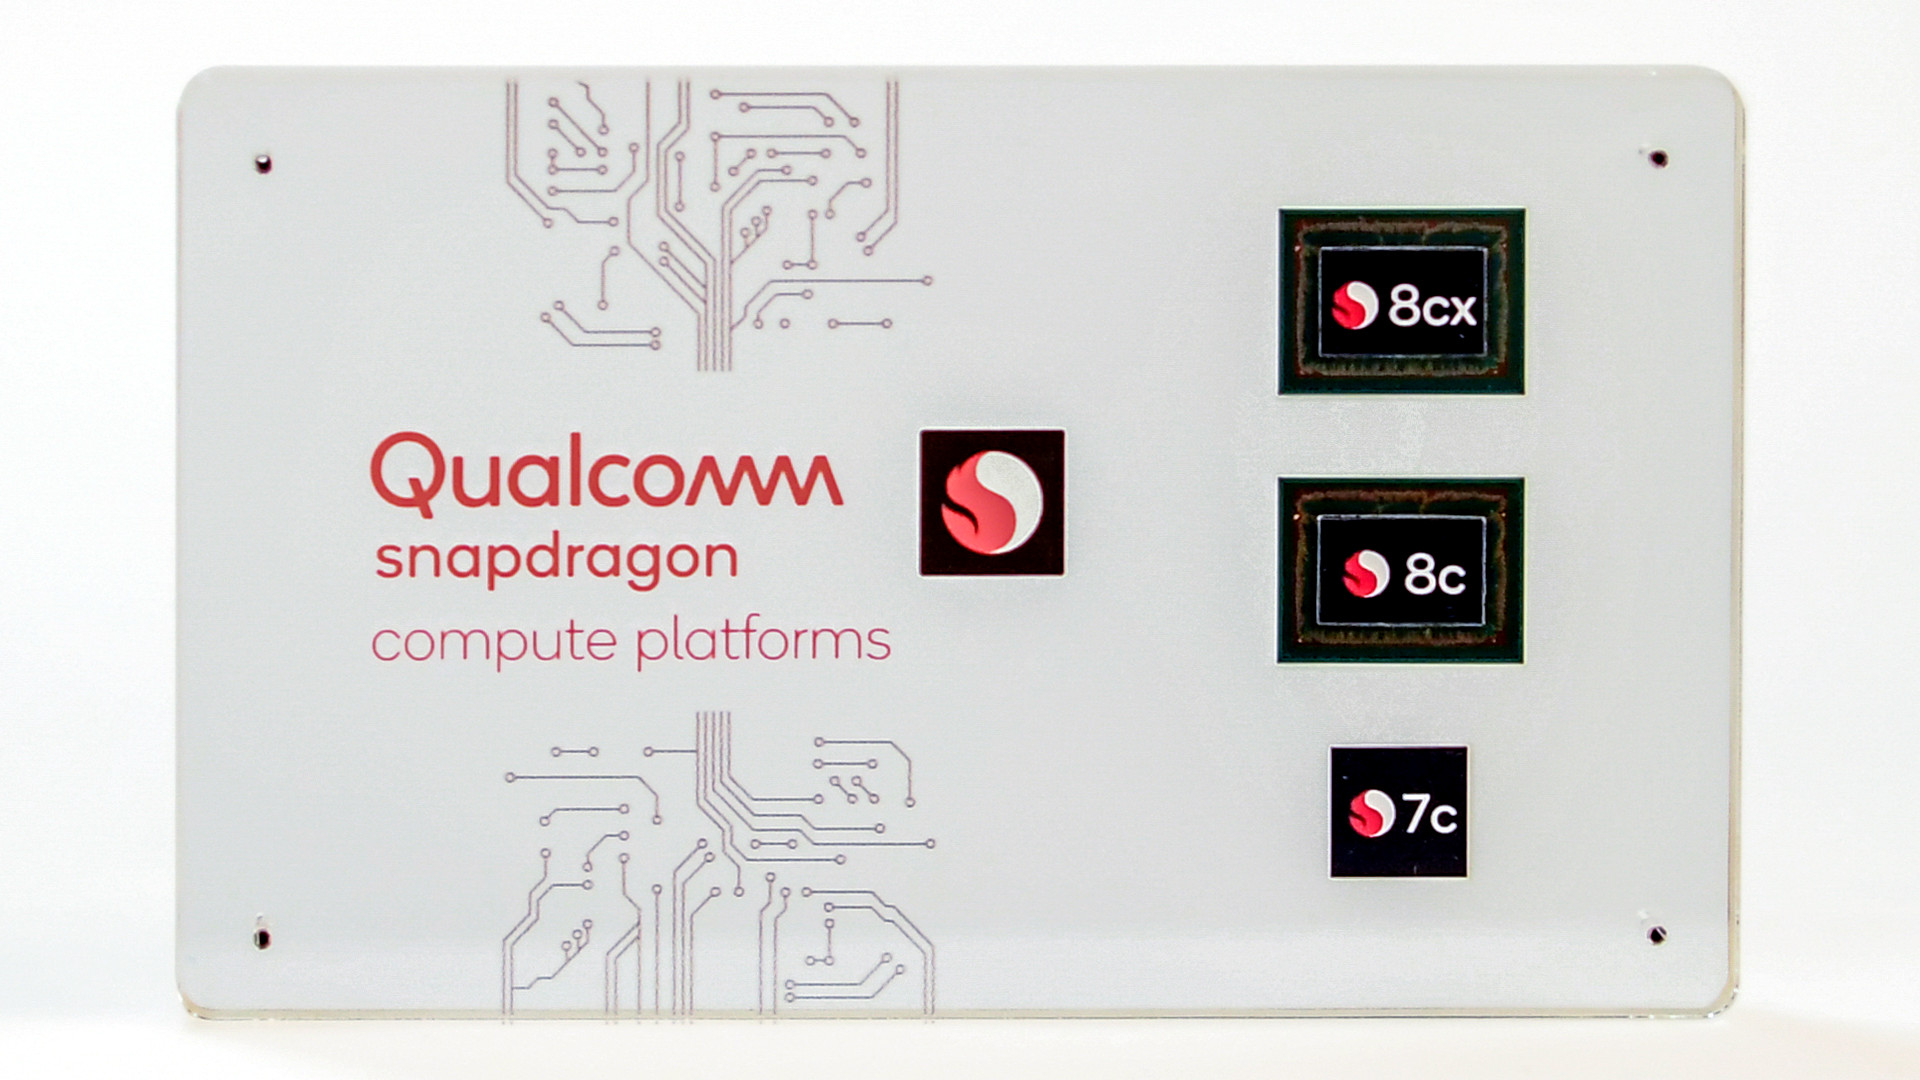 Qualcomm Snapdragon compute platforms